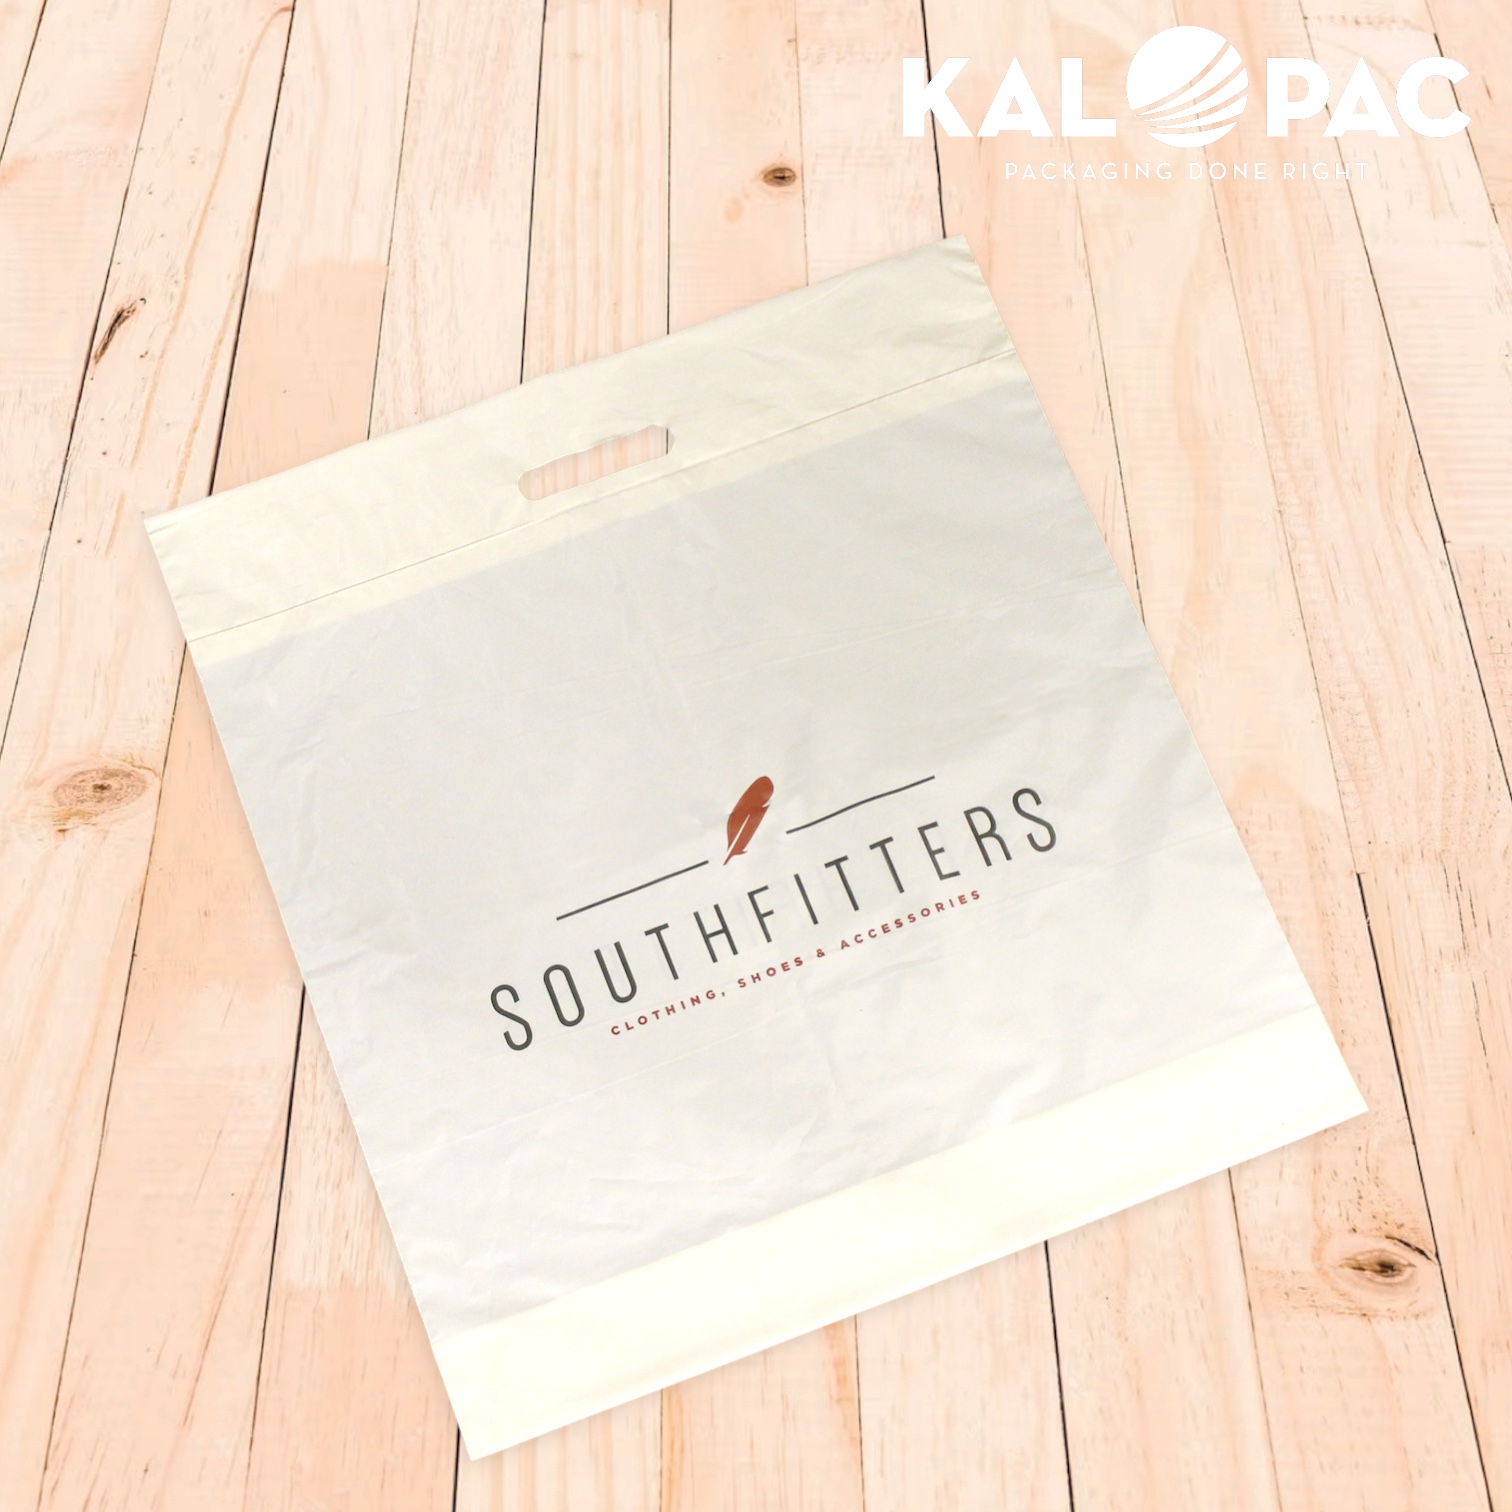 Southfitters Foldover Die Cut Bag